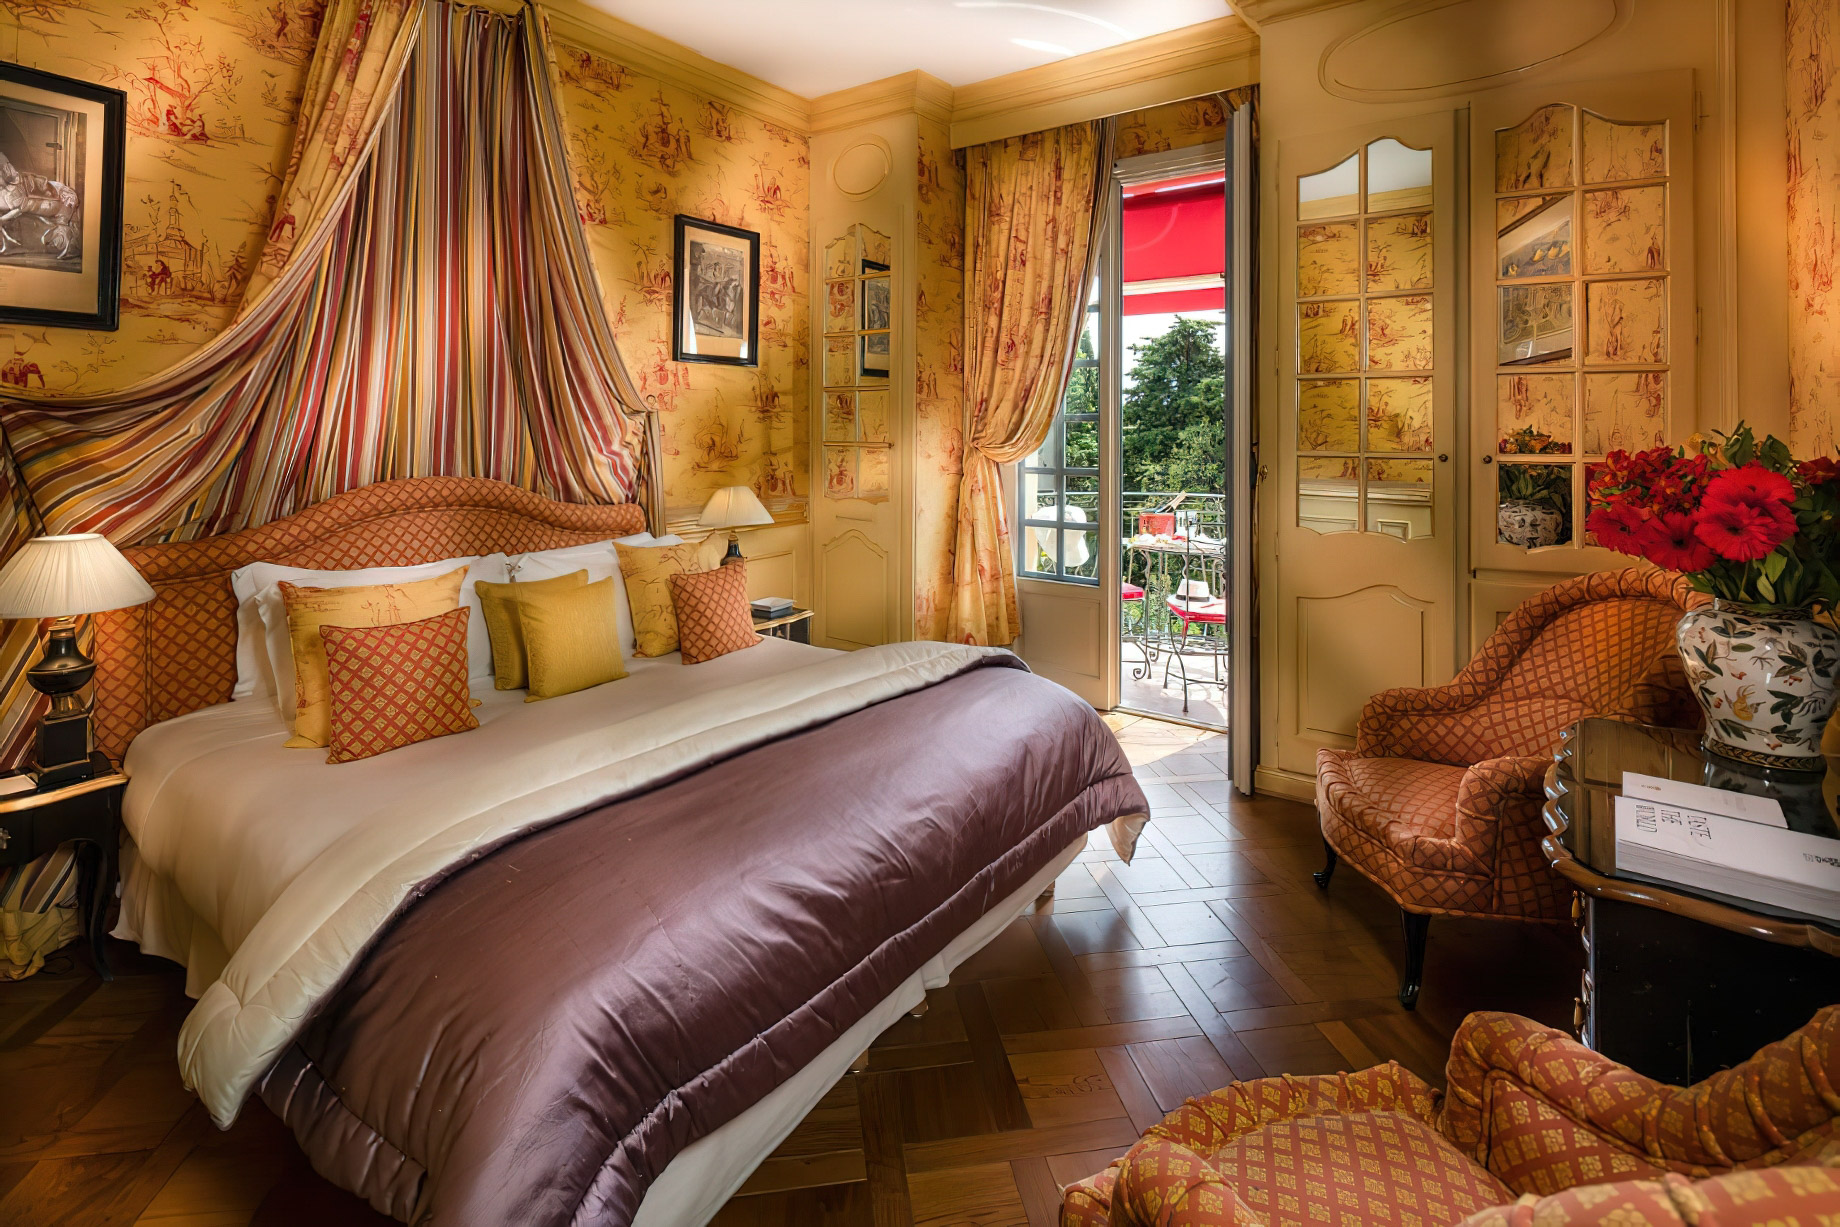 Villa Gallici Relais Châteaux Hotel - Aix-en-Provence, France - Classic Room